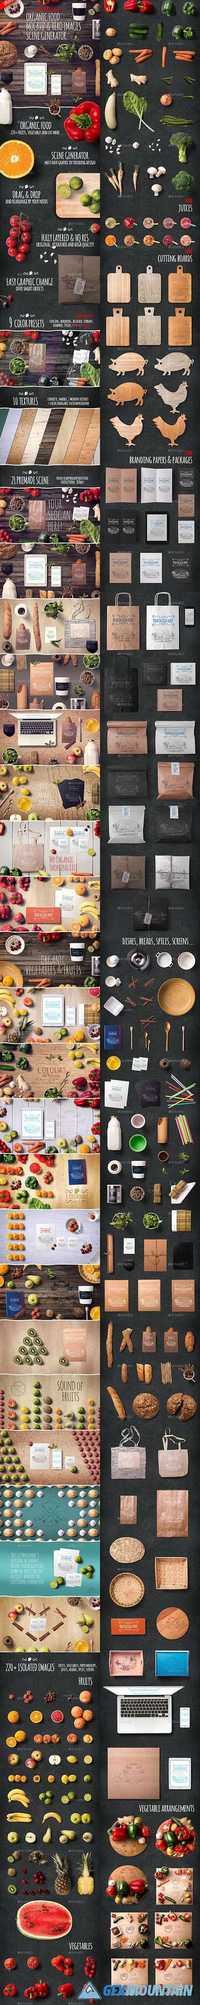 Graphicriver - Organic Food Mockup & Hero Images Scene Generator - 12125621